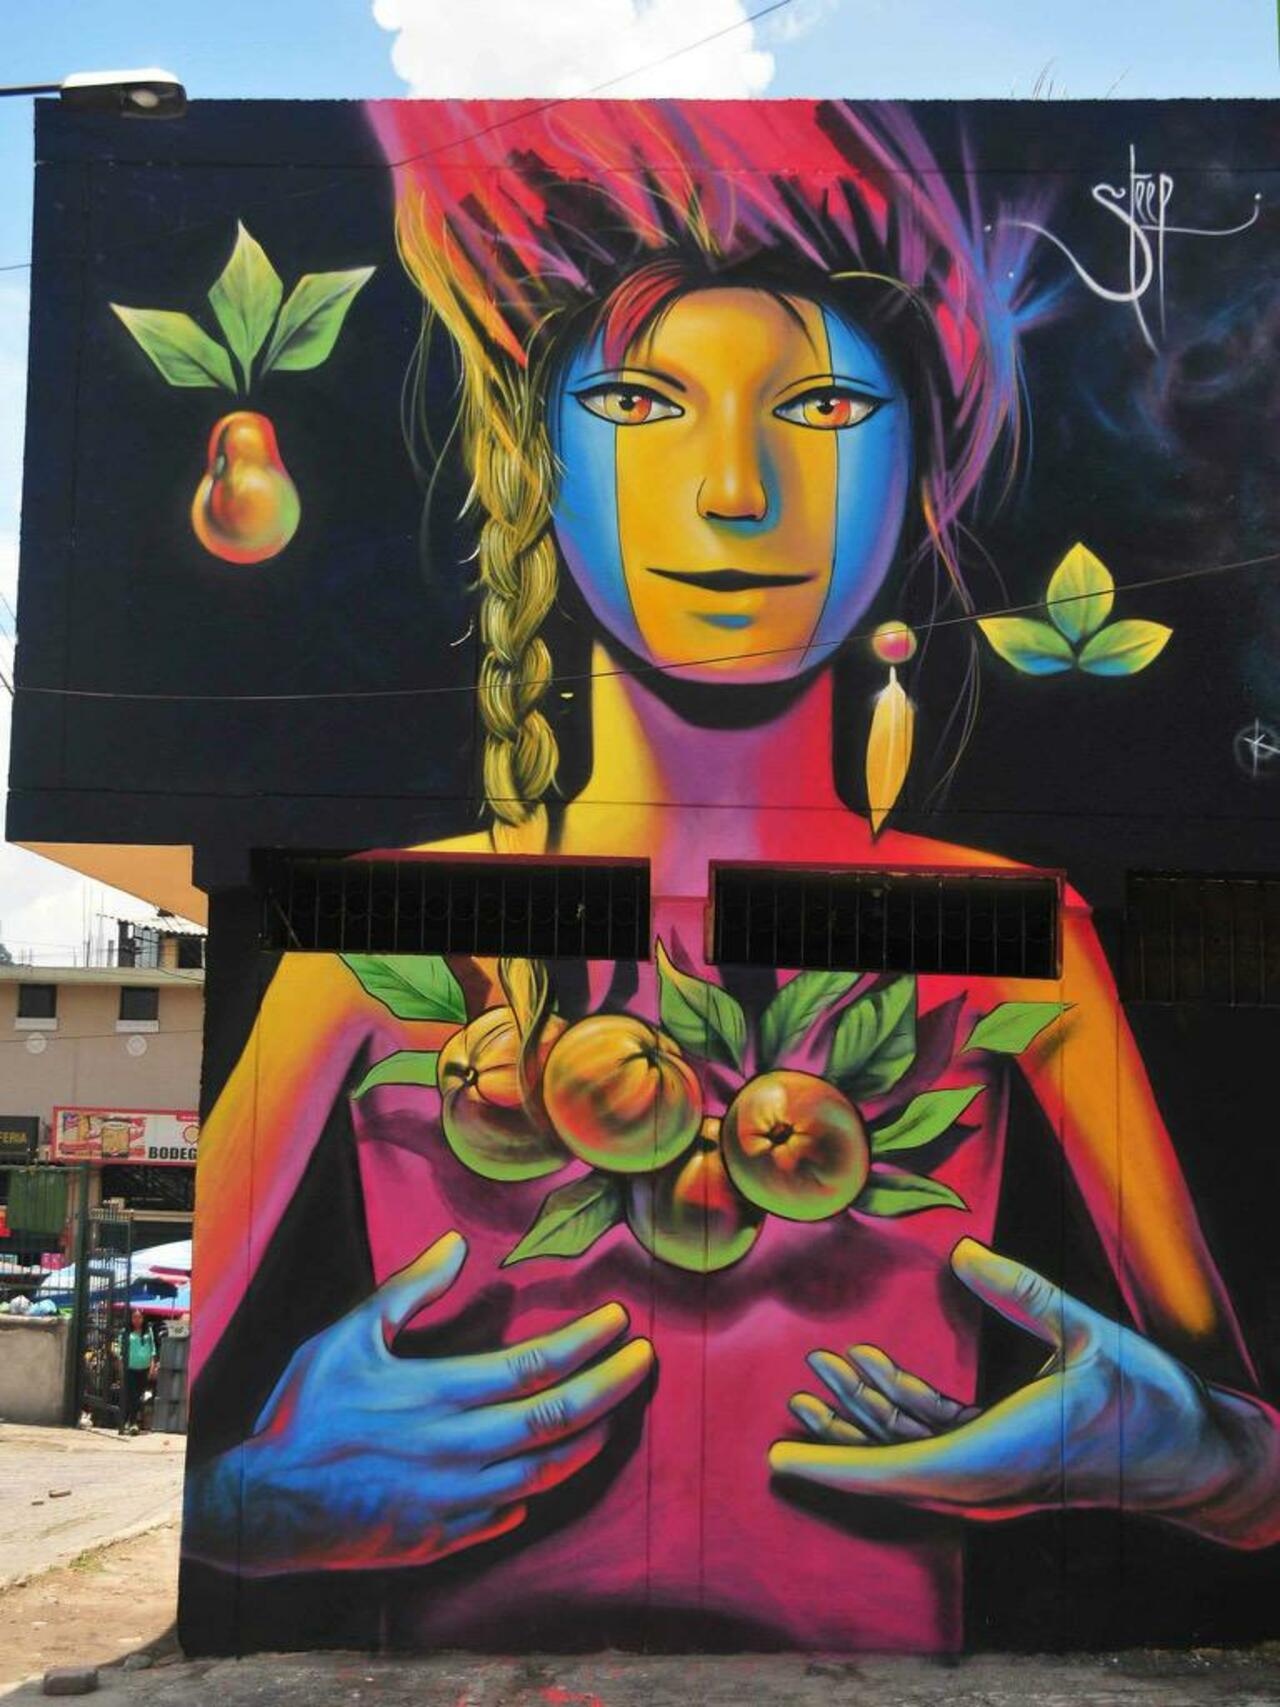 Street Art by Steep #art #graffiti #mural #streetart http://t.co/dKGIfl0HiR http://twitter.com/GoogleStreetArt/status/652717552435638272/photo/1/large?utm_source=fb&utm_medium=fb&utm_campaign=charlesjackso14&utm_content=652720469402103808 … … … … … http://twitter.com/GoogleStreetArt/status/652717552435638272/photo/1/large?utm_source=fb&utm_medium=fb&utm_campaign=charlesjackso14&utm_content=652732464625025024